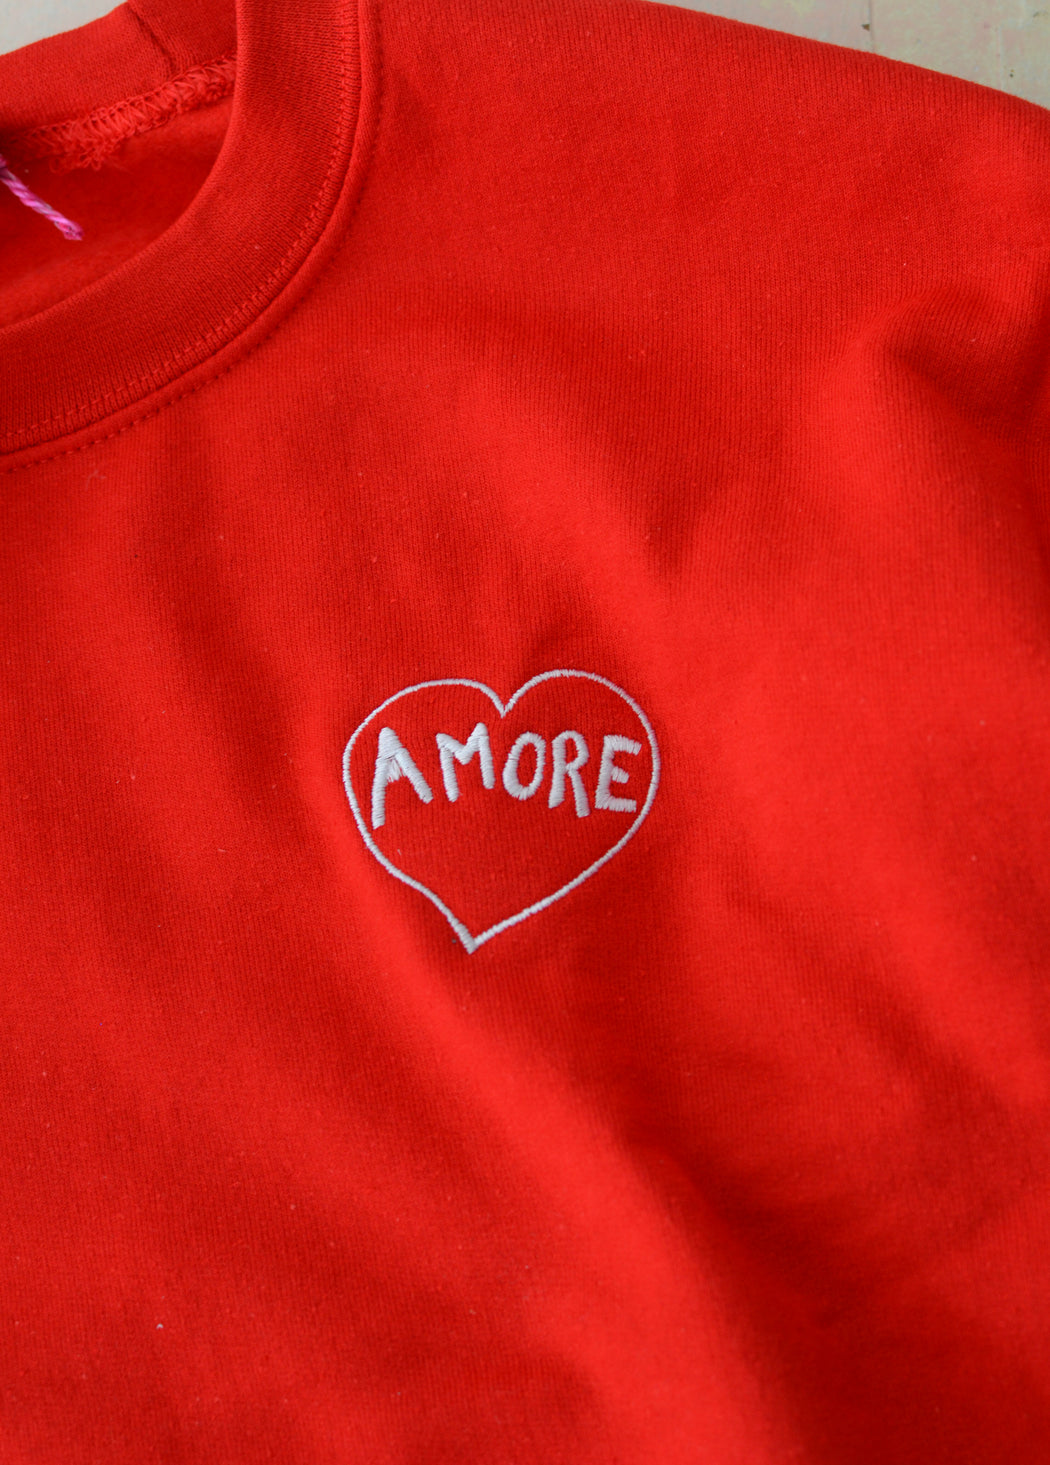 Amore organic cotton sweatshirt - green, french navy, red